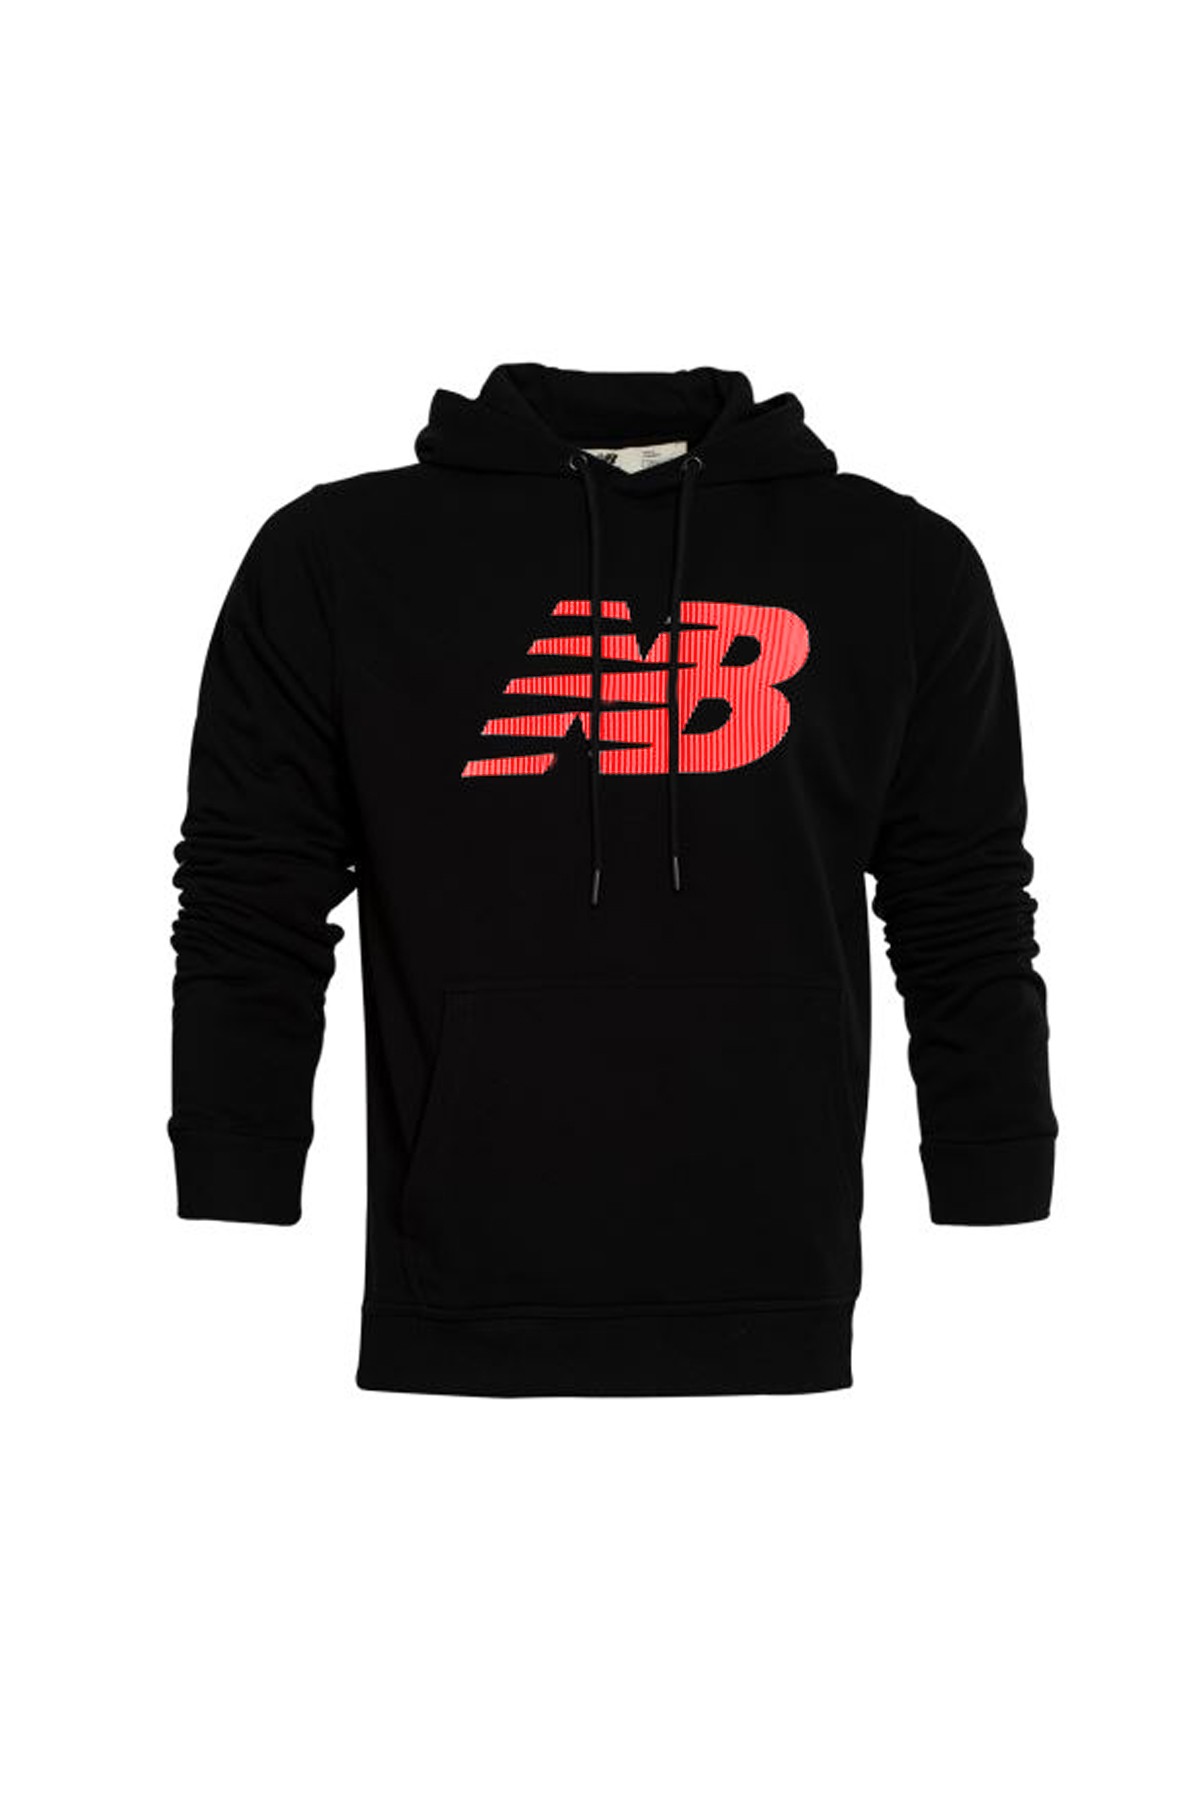 New Balance MPS016-BK - Logo Mens Crew Erkek Siyah Sweatshirt